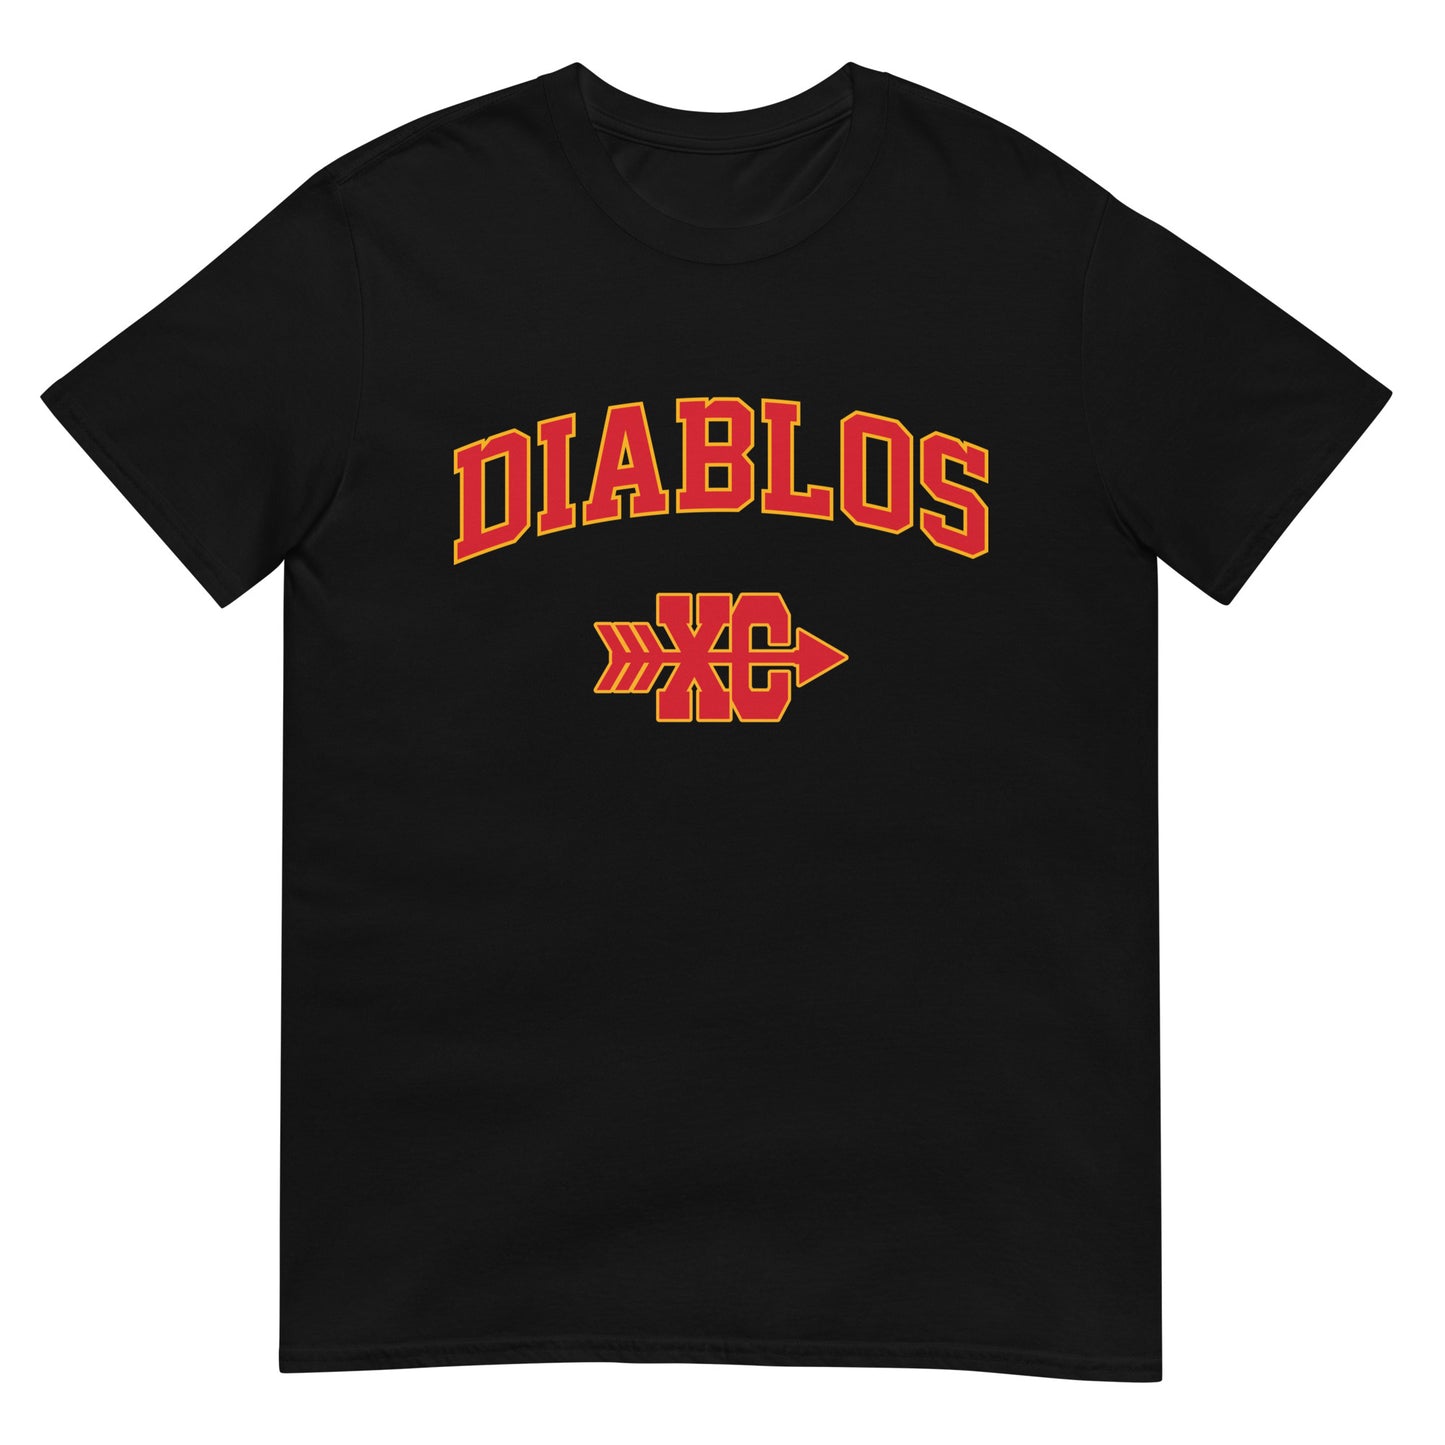 Diablos Cross Country Short-Sleeve Unisex T-Shirt